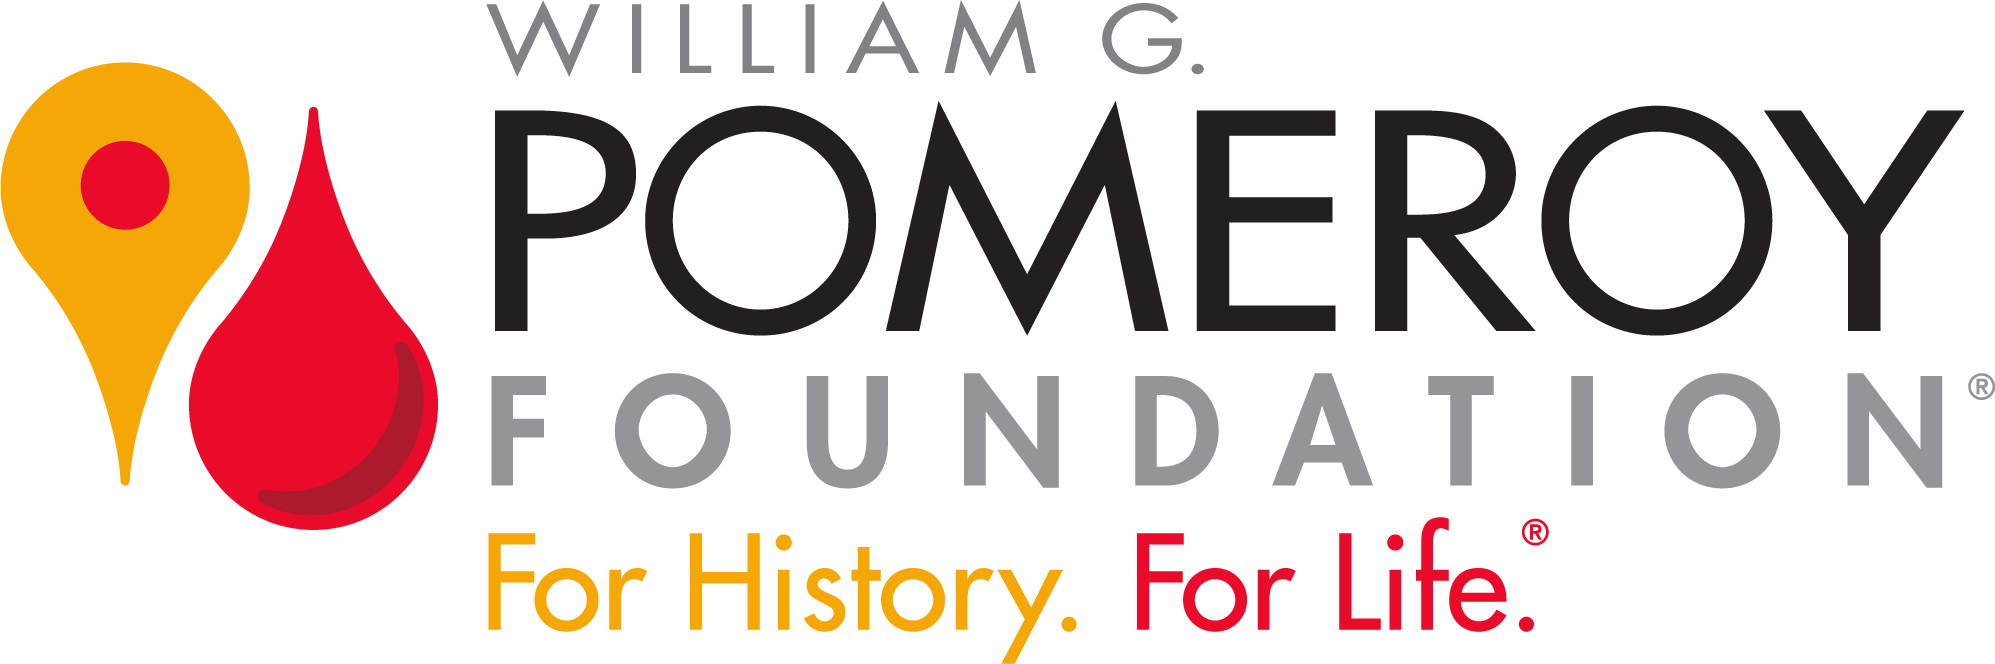 A. William G Pomeroy Foundation (Promise Garden)